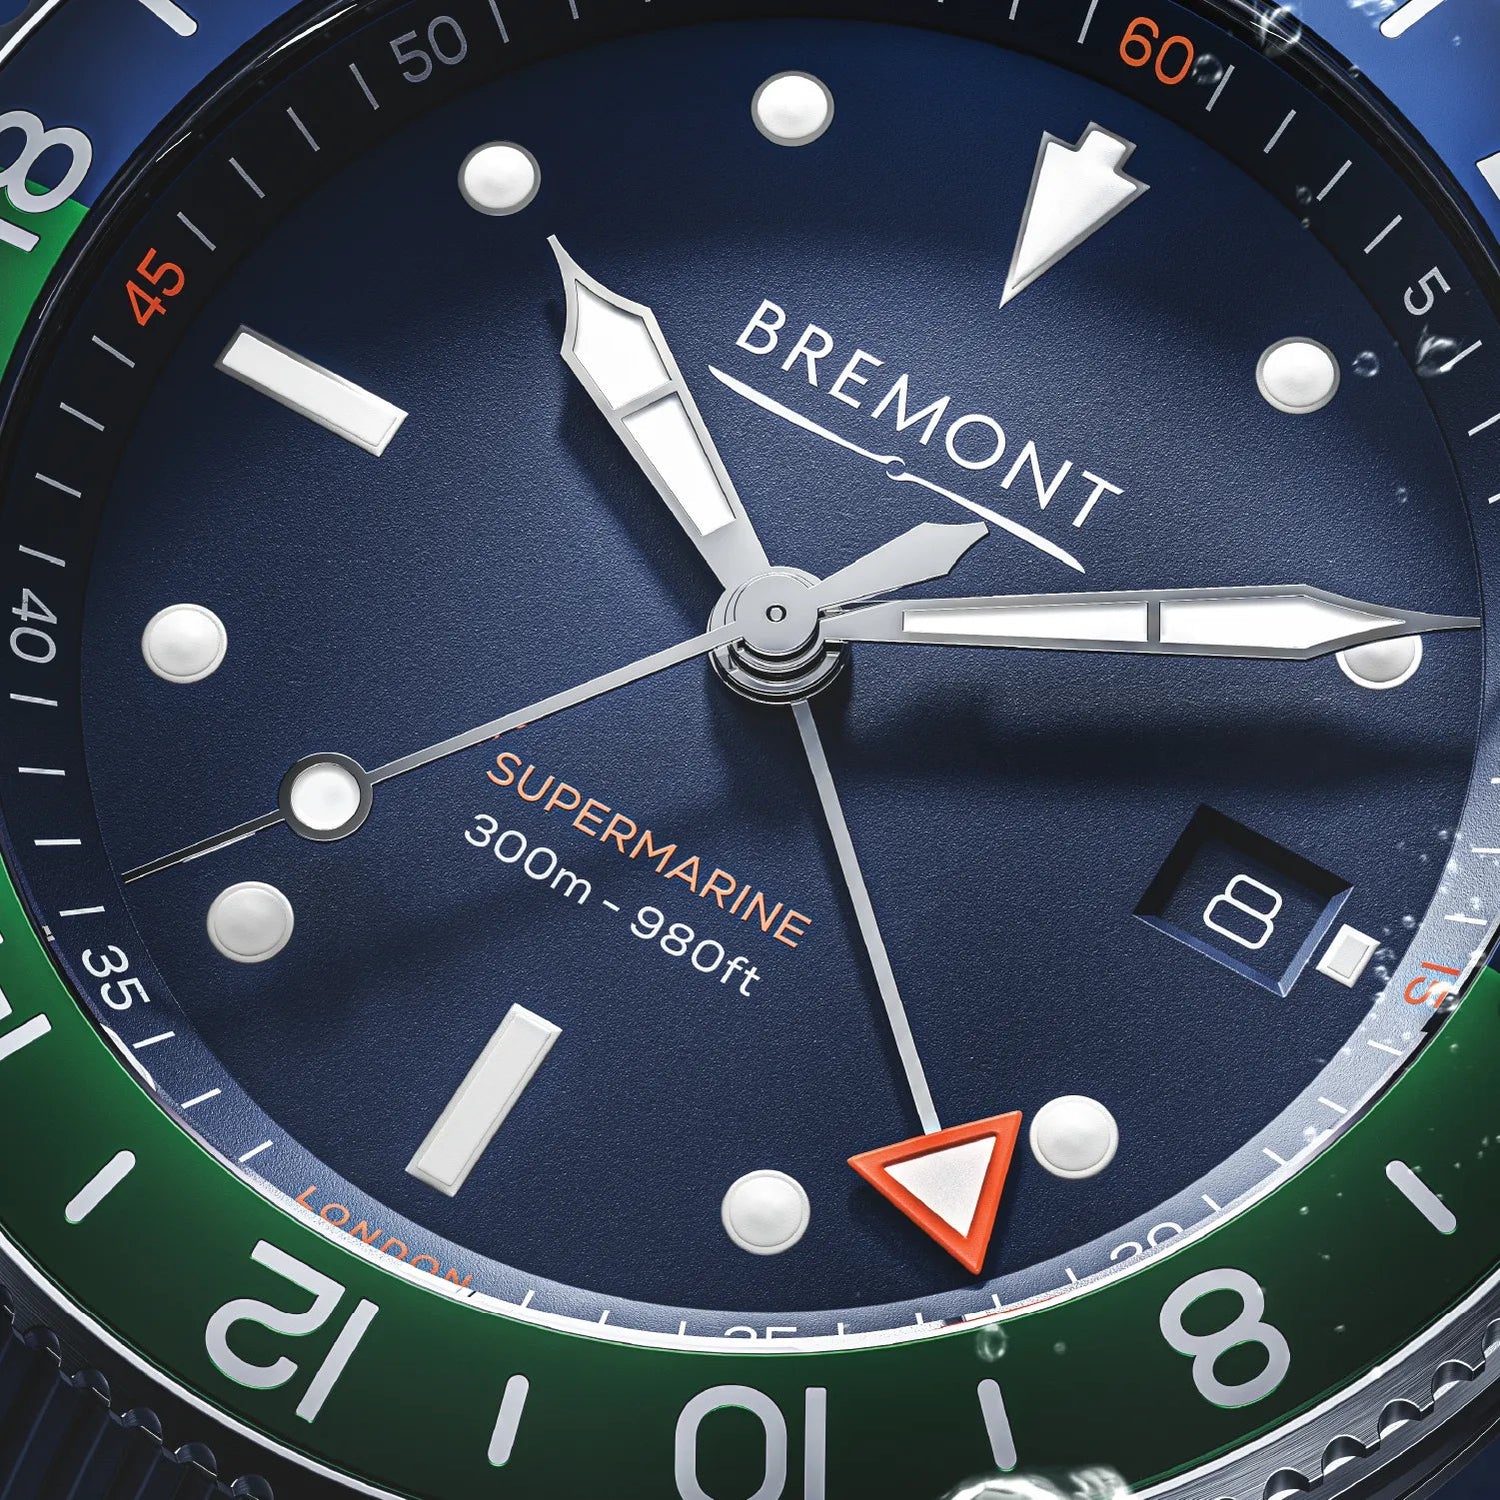 Bremont Watch Company Watches | Mens | Supermarine Regular length (15cm - 19cm wrist size) S302 (BLGN Rubber)